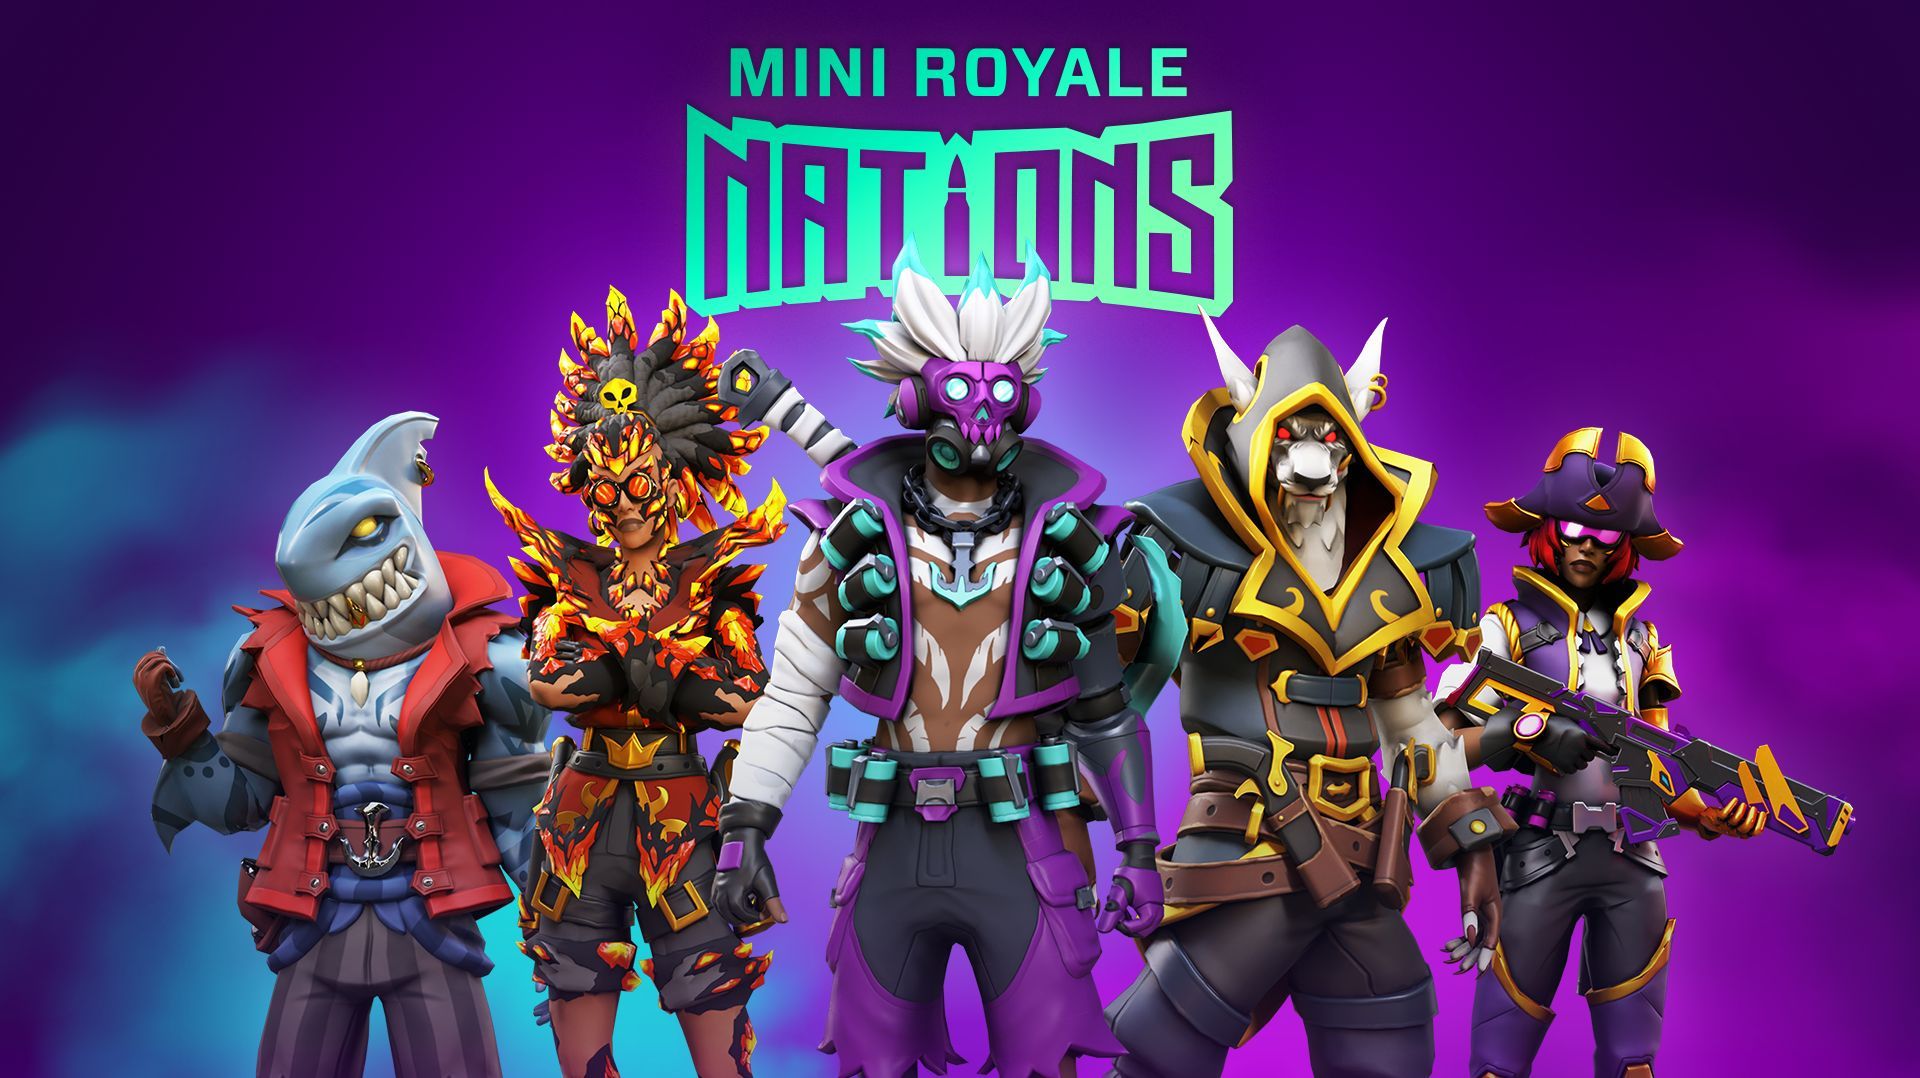 Mini Royale: Nations game art